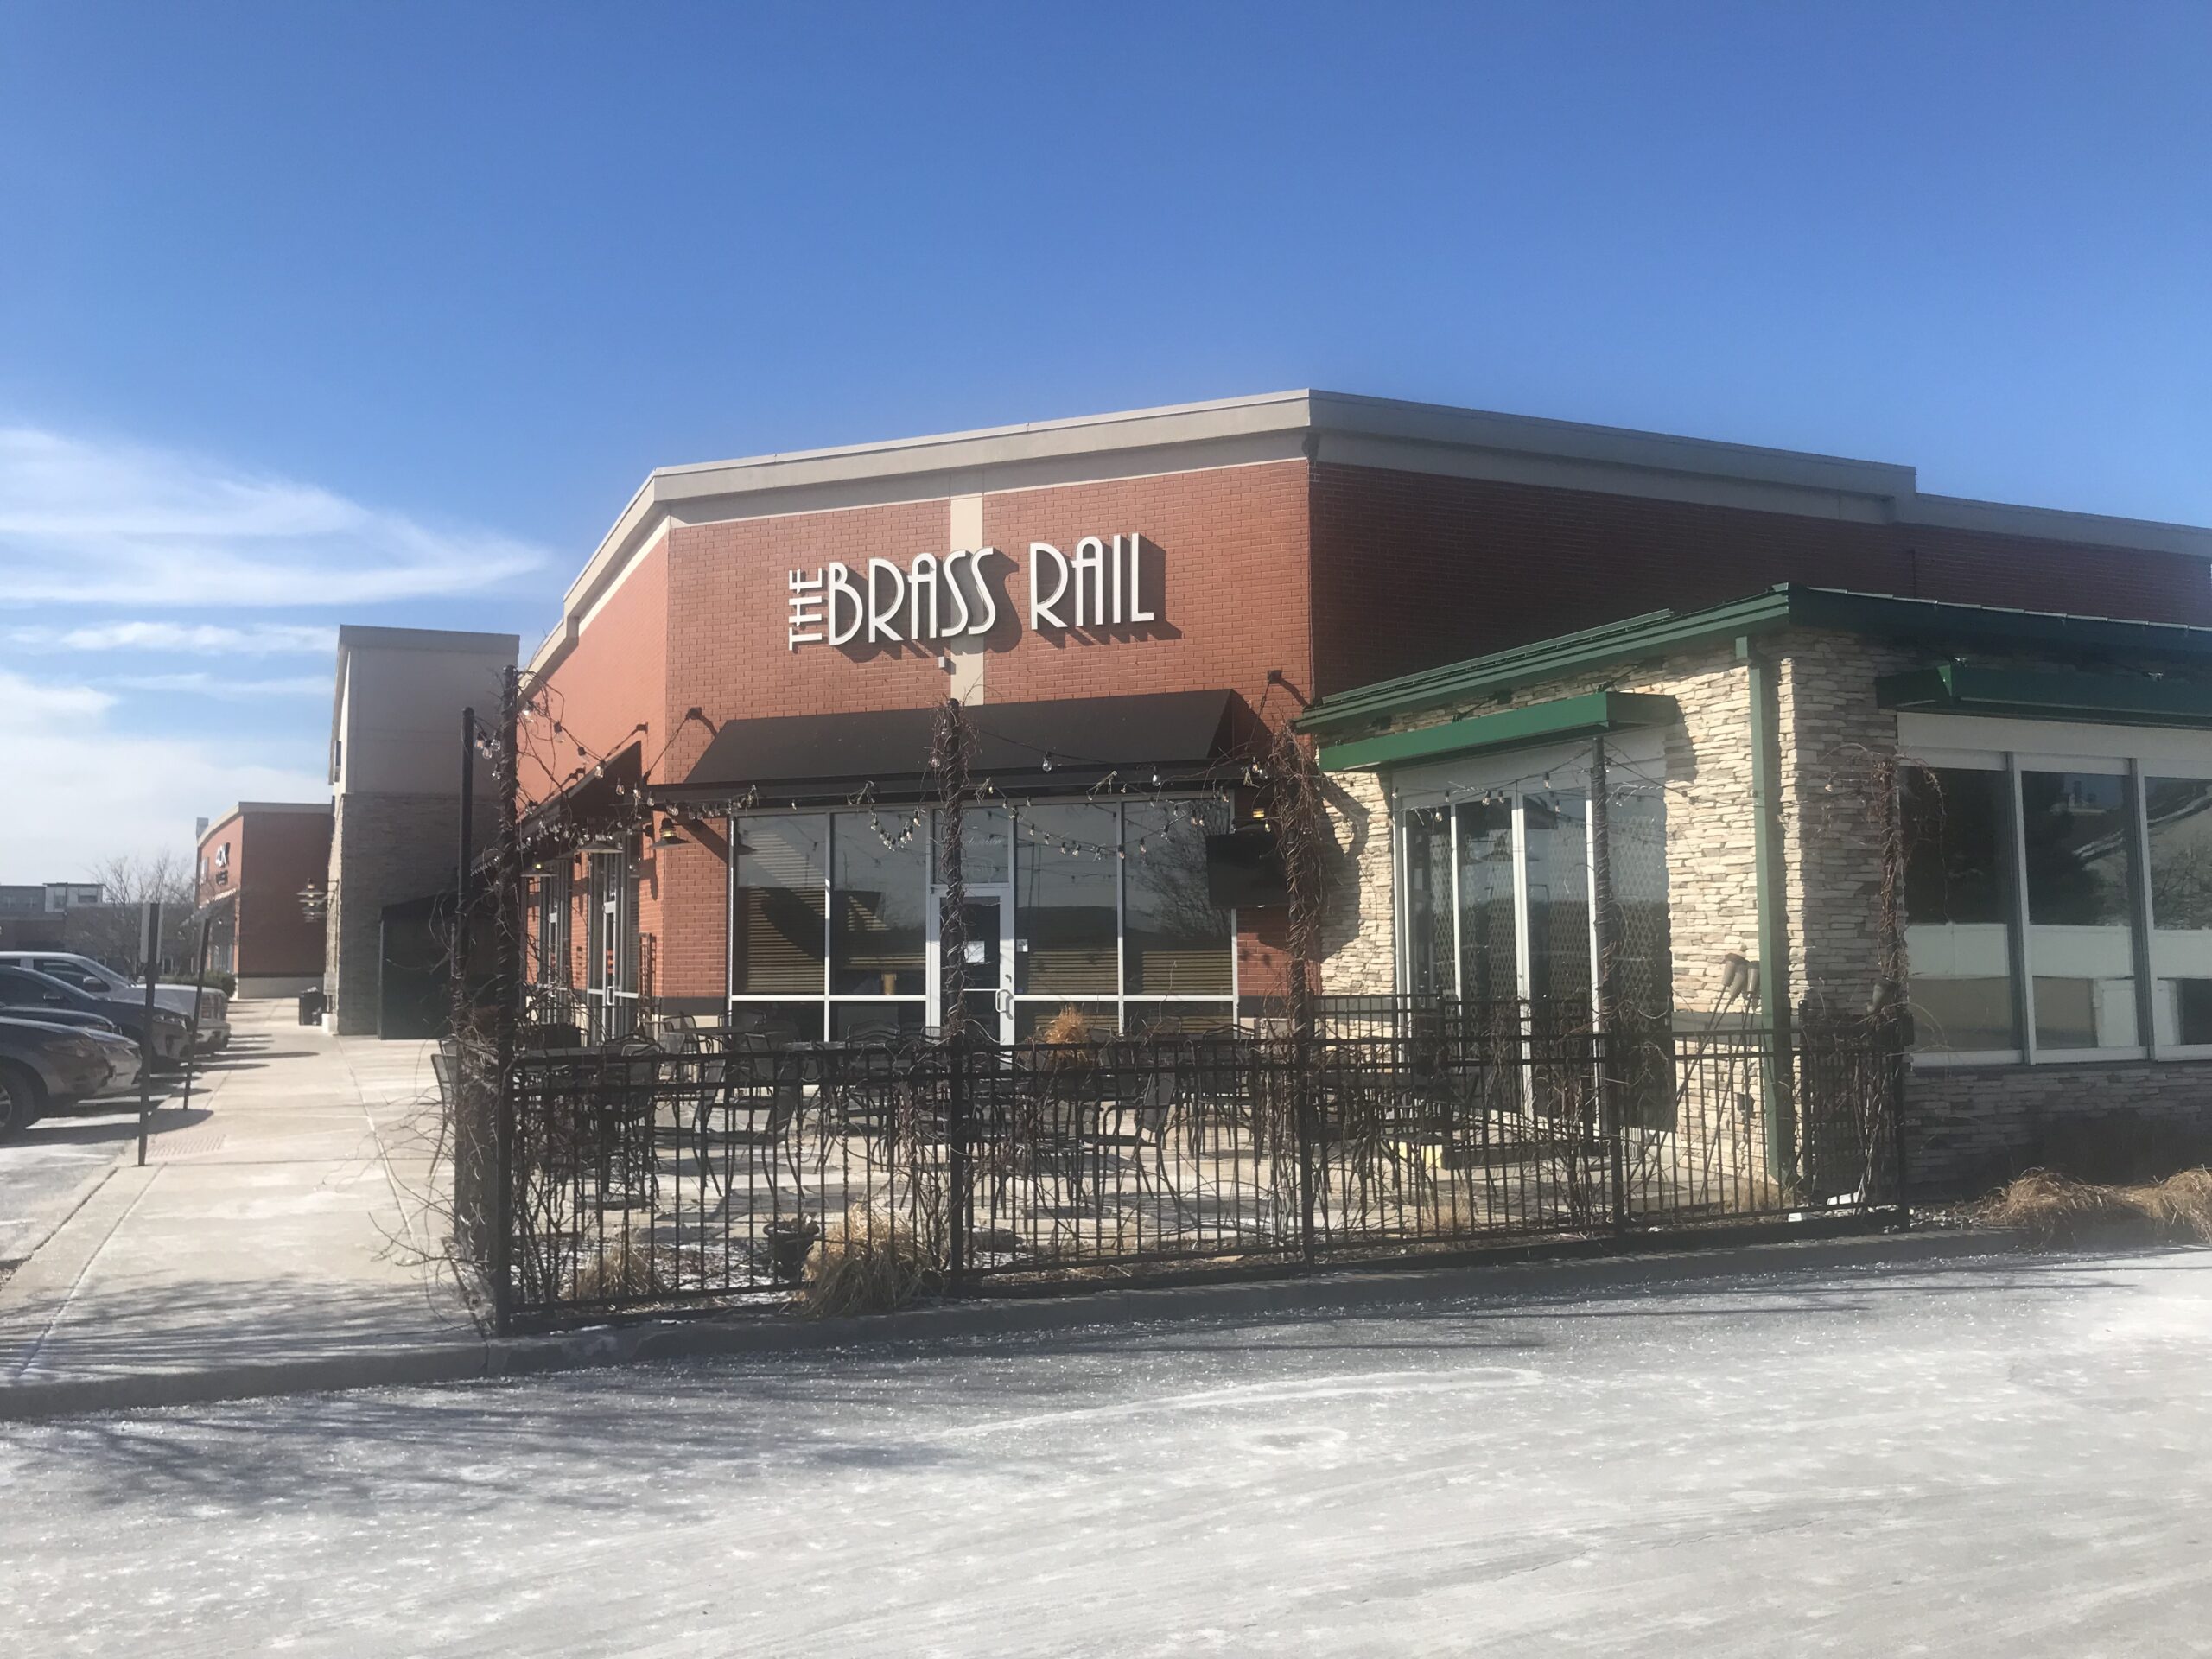 Restaurant Review - The Brass Rail in O’Fallon, MO